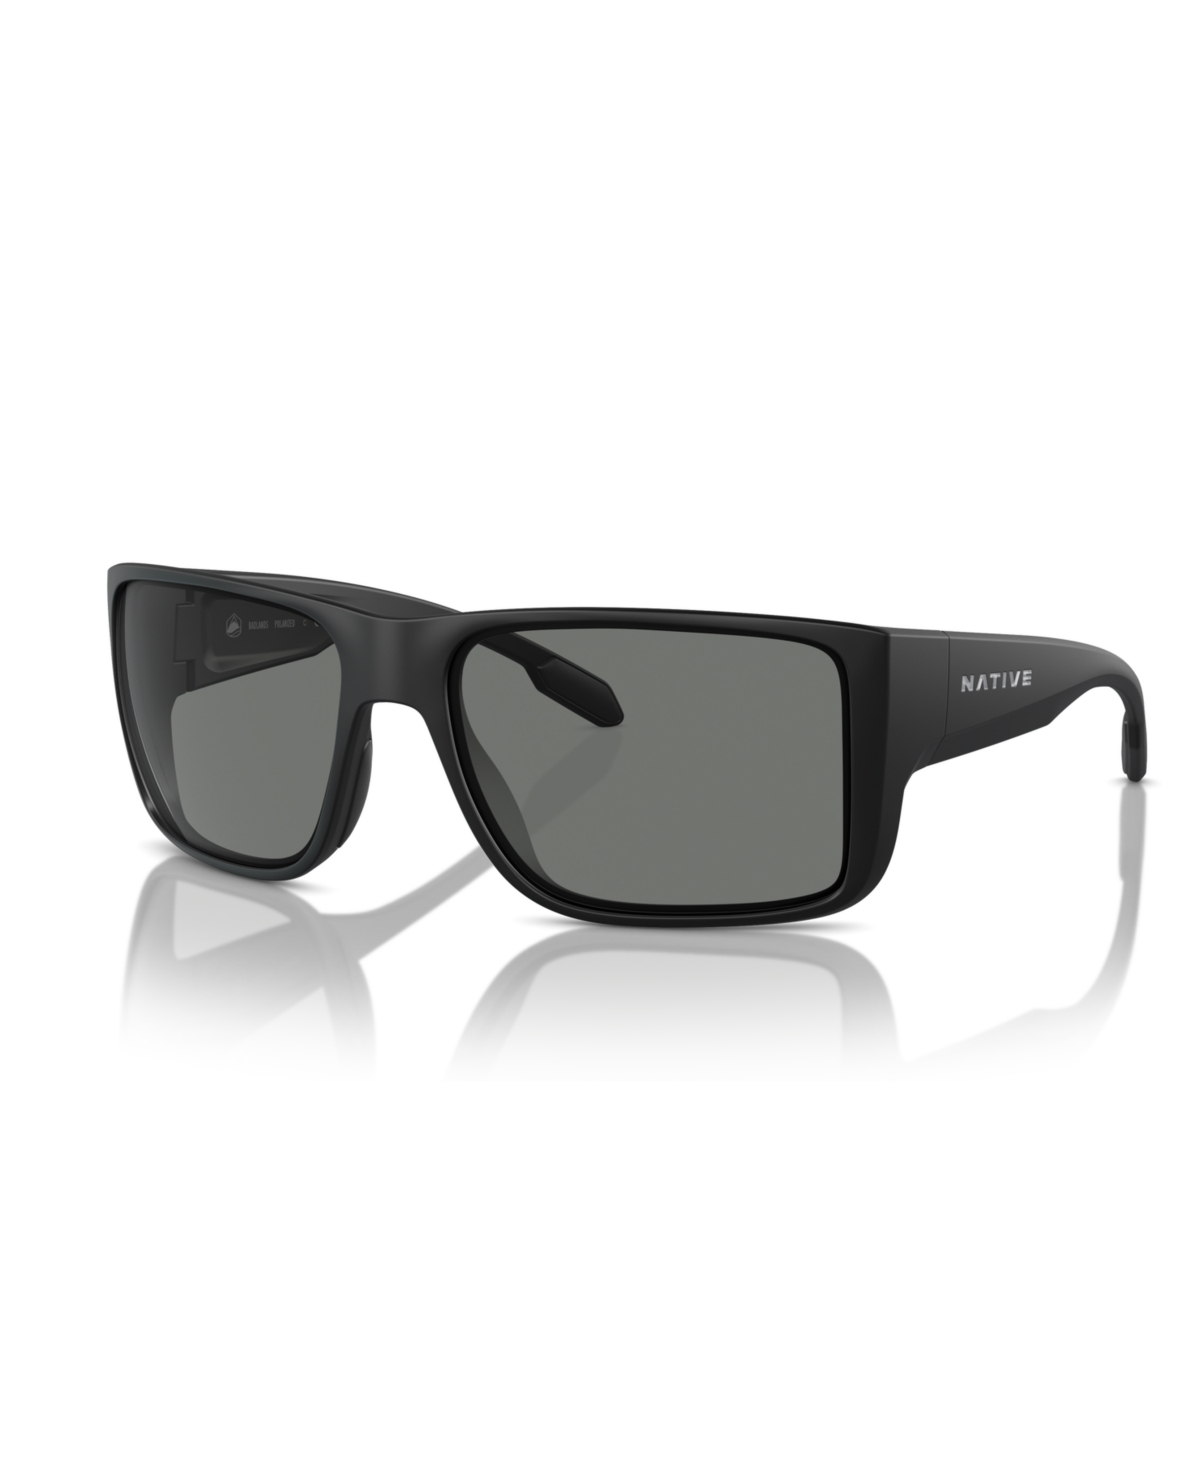 Native Eyewear Men's Polarized Sunglasses, Badlands Xd9045 In Matte Black